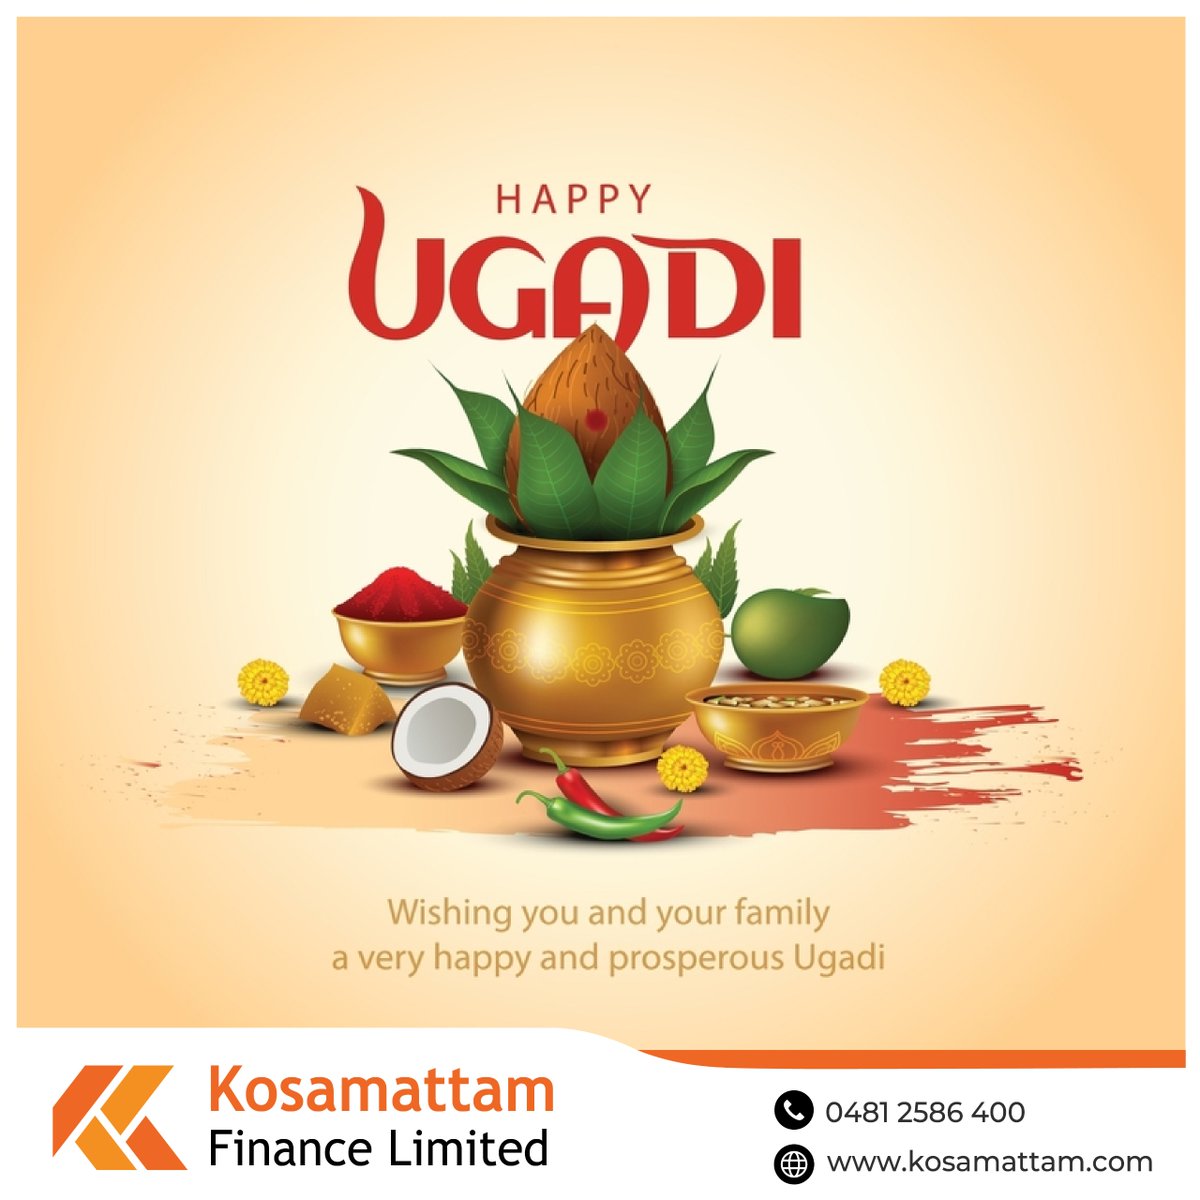 As we embrace the new year with Ugadi, let's embrace new opportunities and experiences… Warmest wishes on Ugadi from Kosamattam Finance!!!
#Ugadi #NewYear #Prosperity #KosamattamFinance #Celebration #JoyfulBeginnings